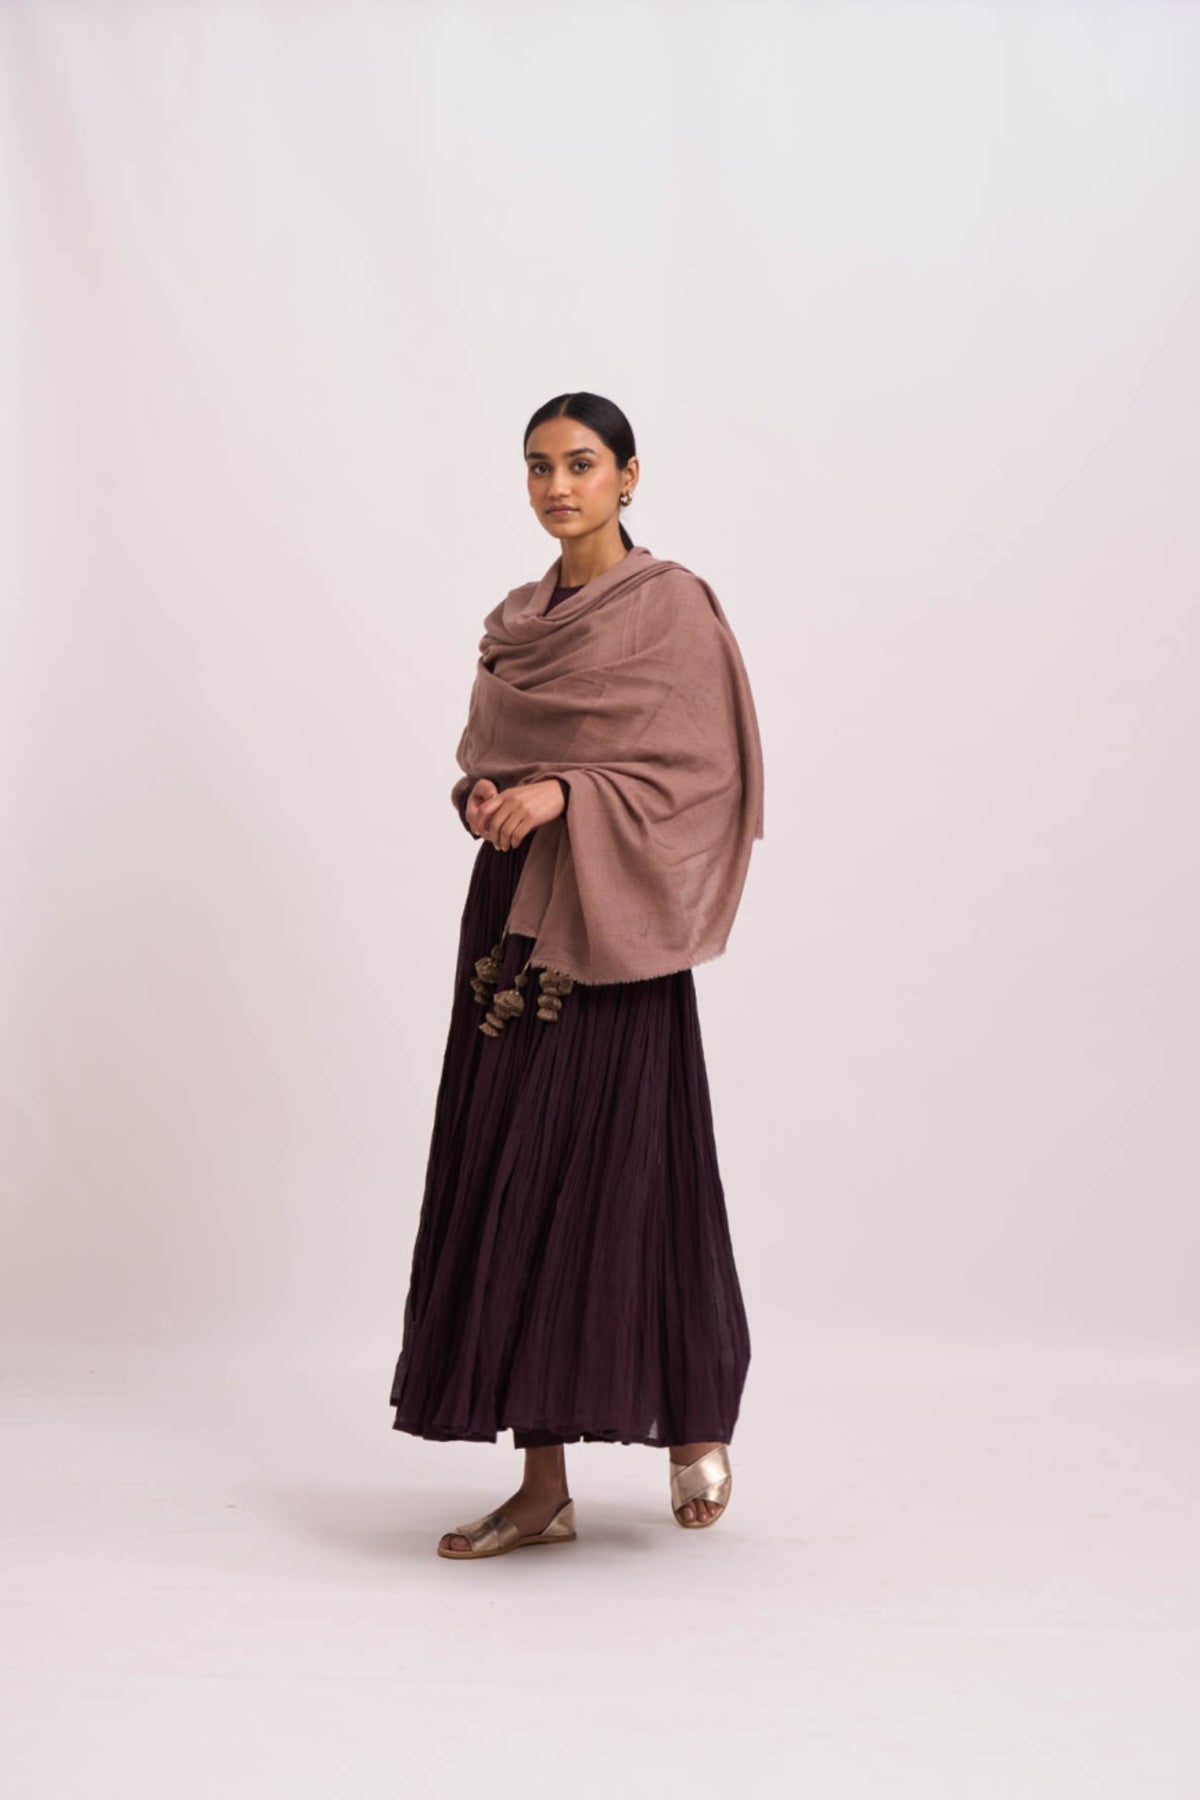 Brown shawl